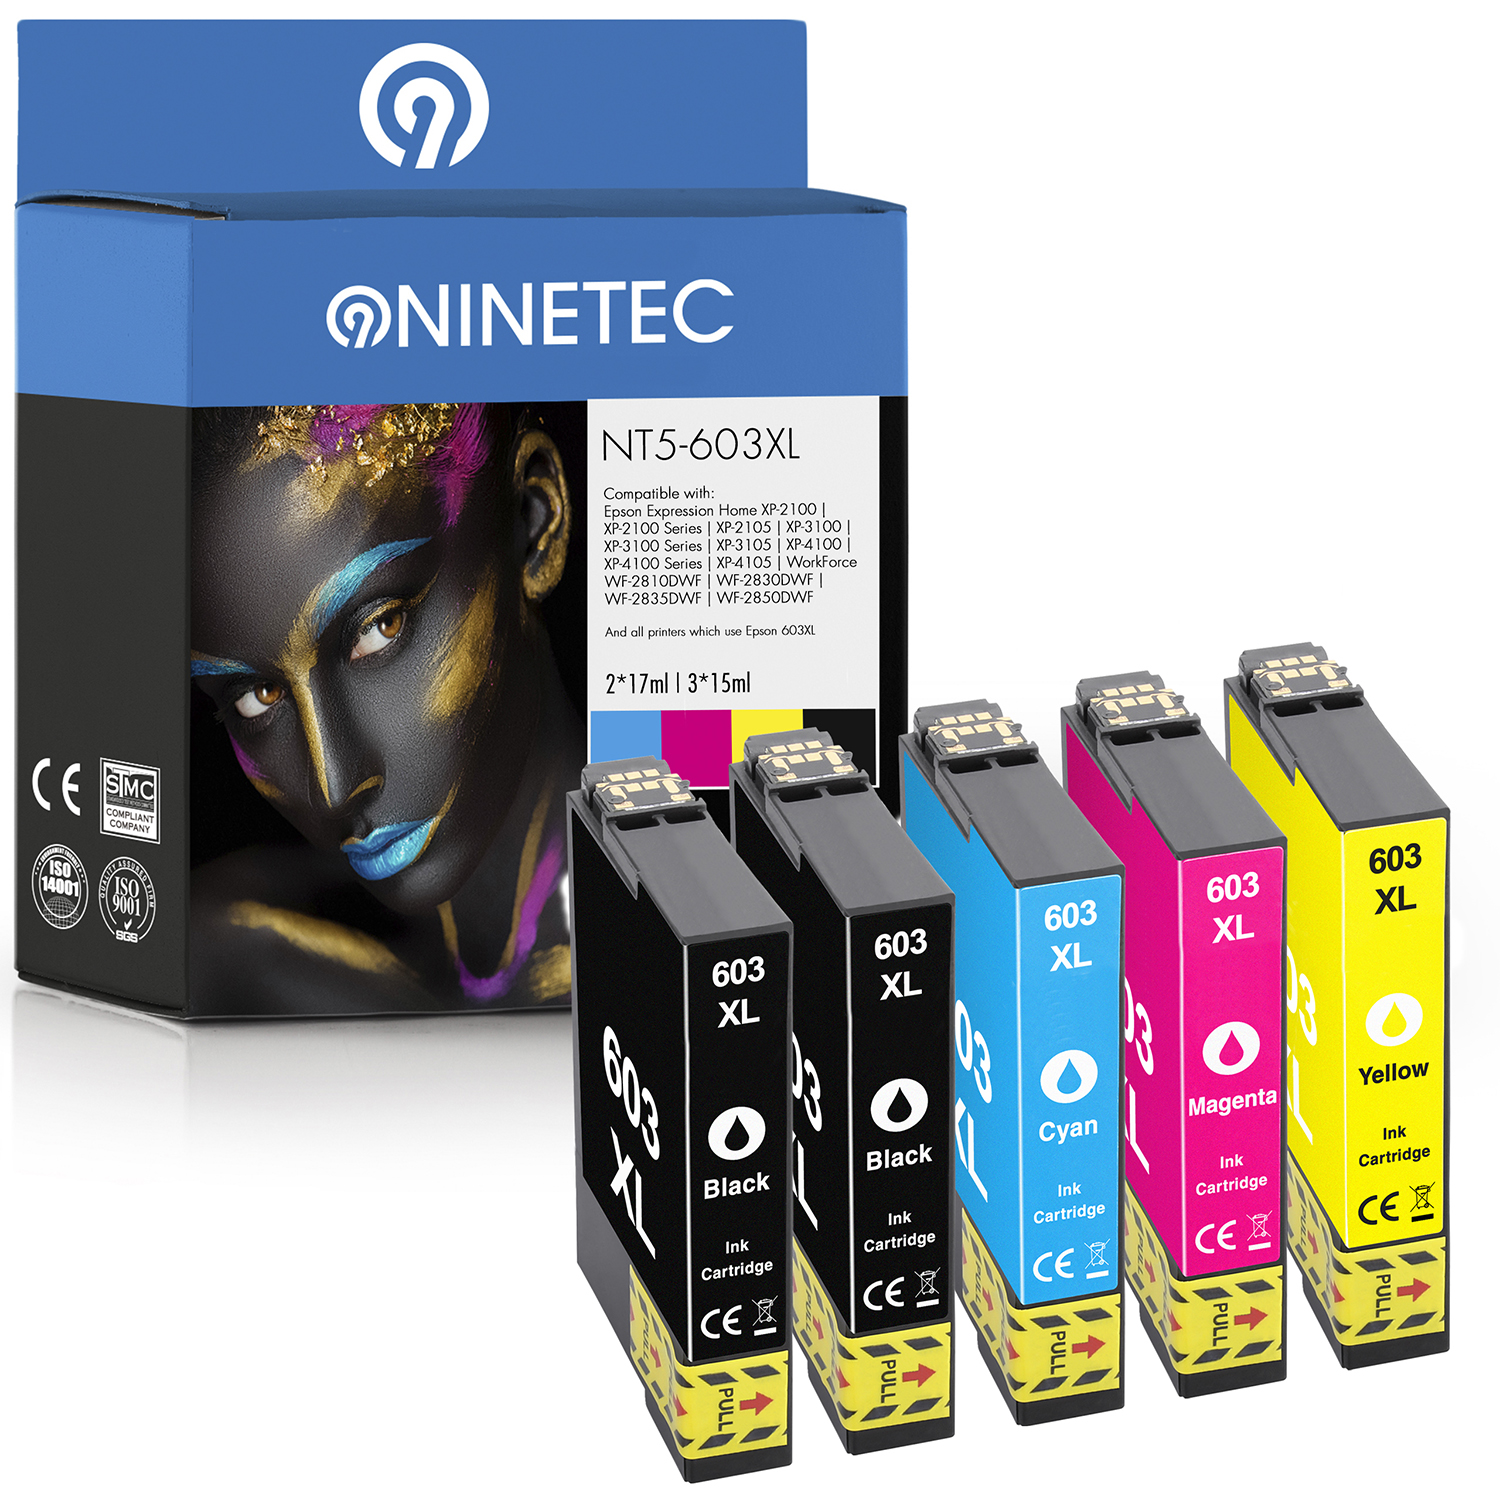 NINETEC 5er Set T Epson ersetzt black, 13 C yellow 03A44010) Patronen 03A34010, T C (C T Tintenpatronen T 13 cyan, magenta, C 13 03A24010, 603XL 03A14010, 13